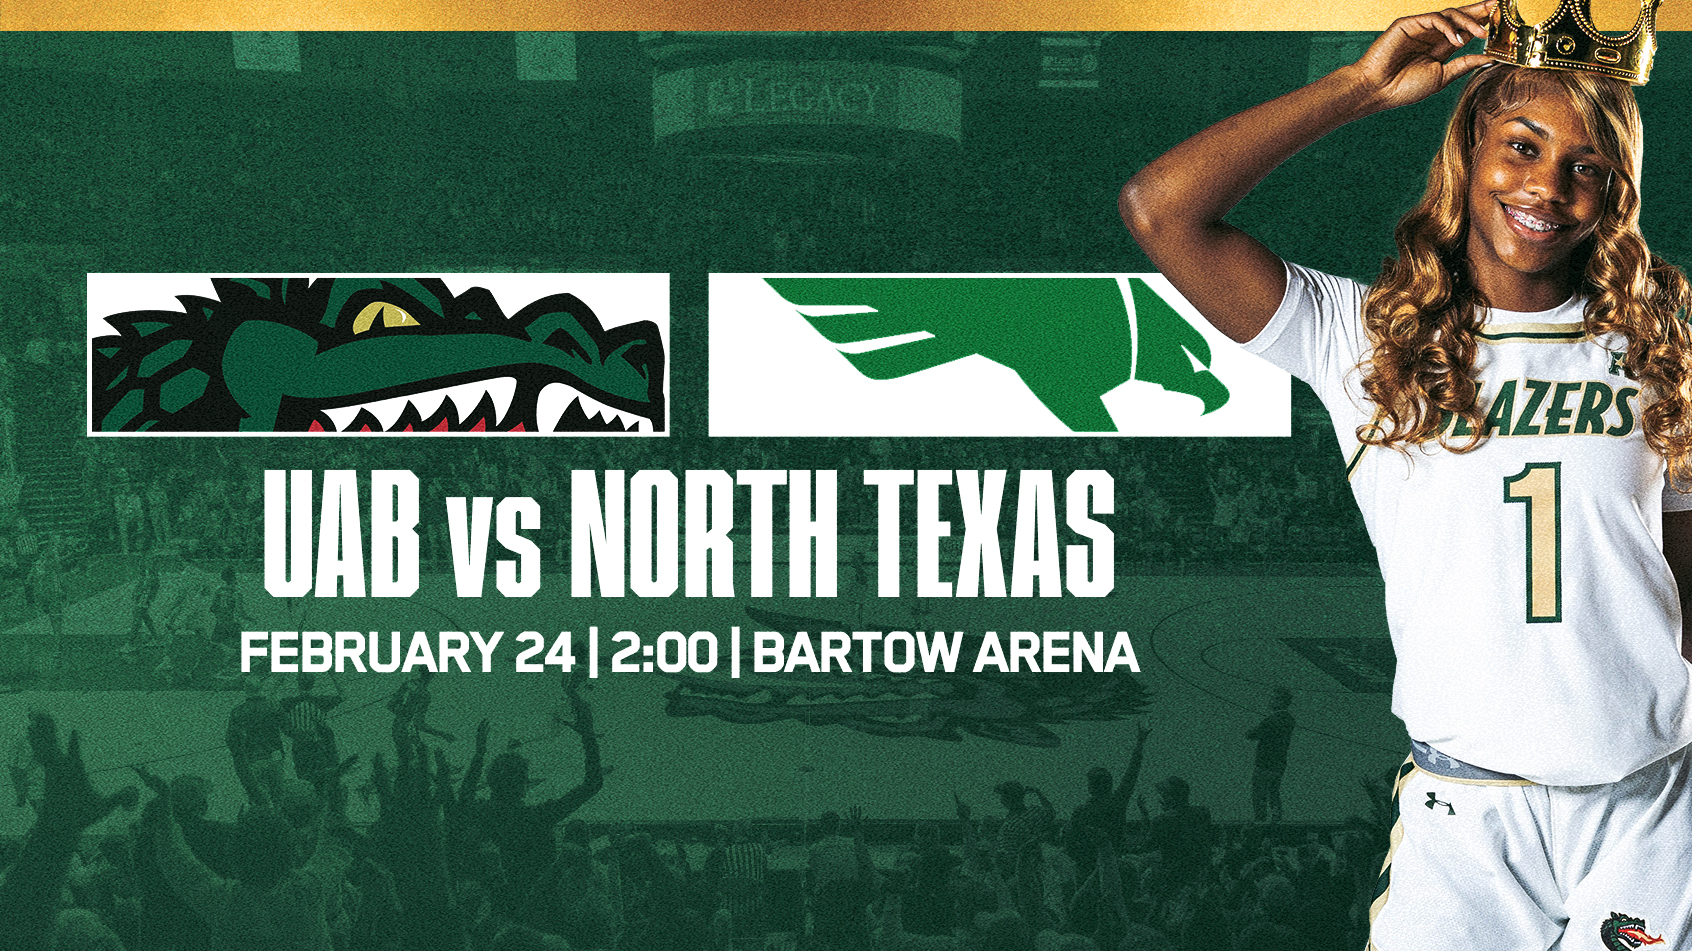 UAB Women's Basketball: Blazers vs North Texas. February 24, 2:00pm at Bartow Arena.